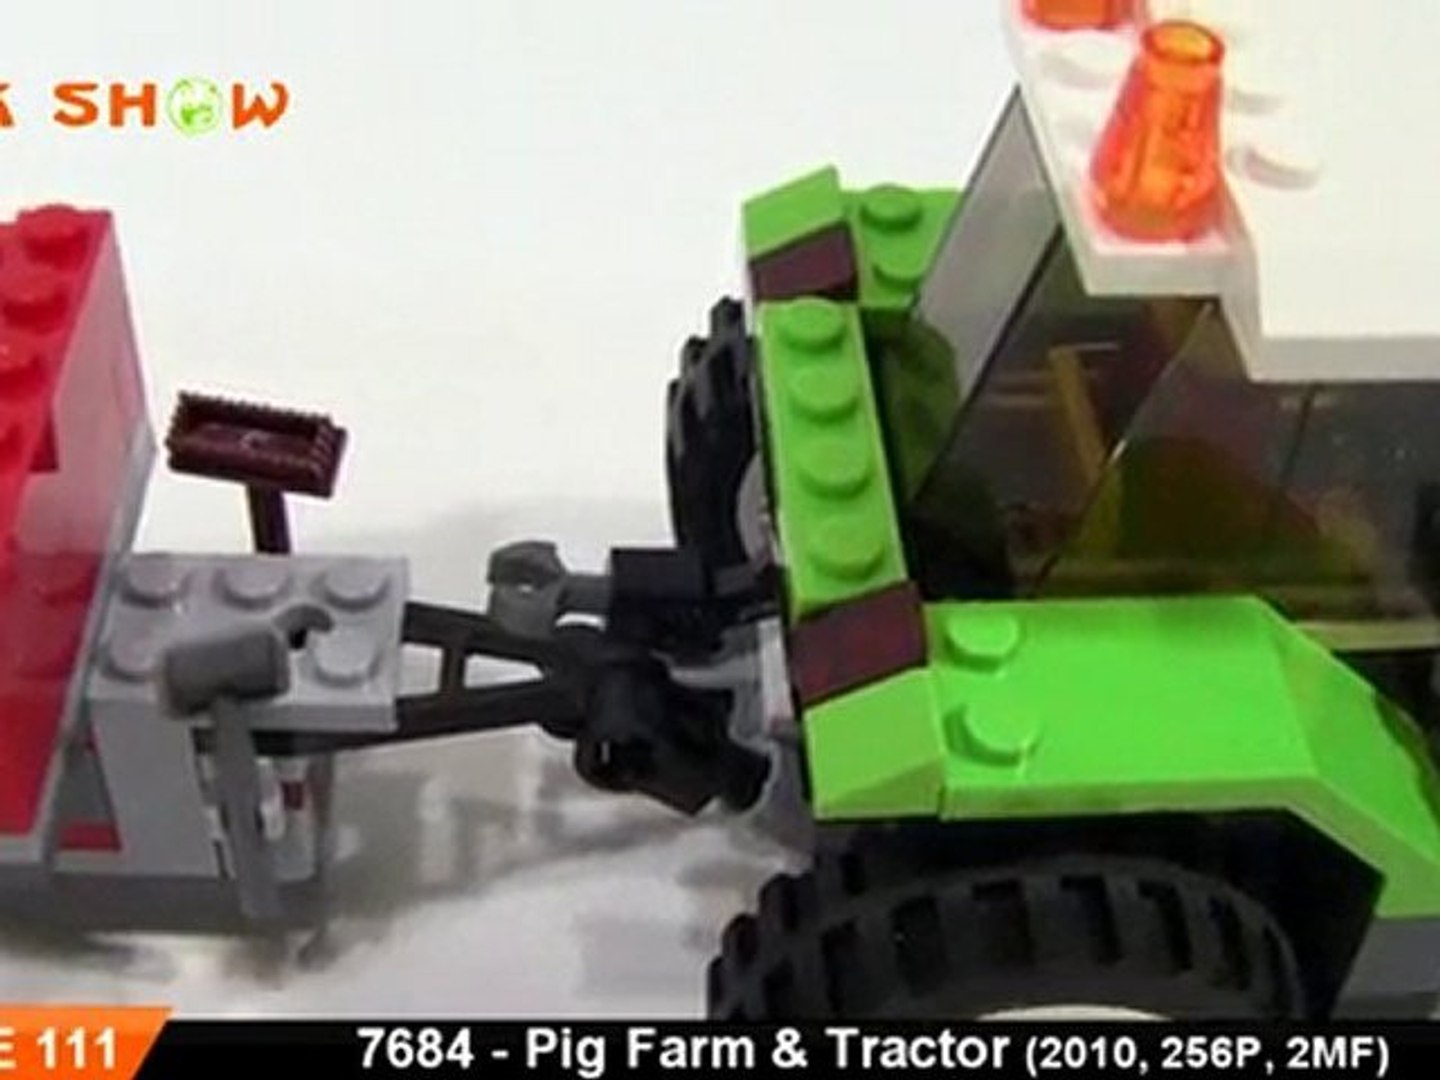 LEGO City Pig Farm & Tractor : LEGO 7684 - video Dailymotion